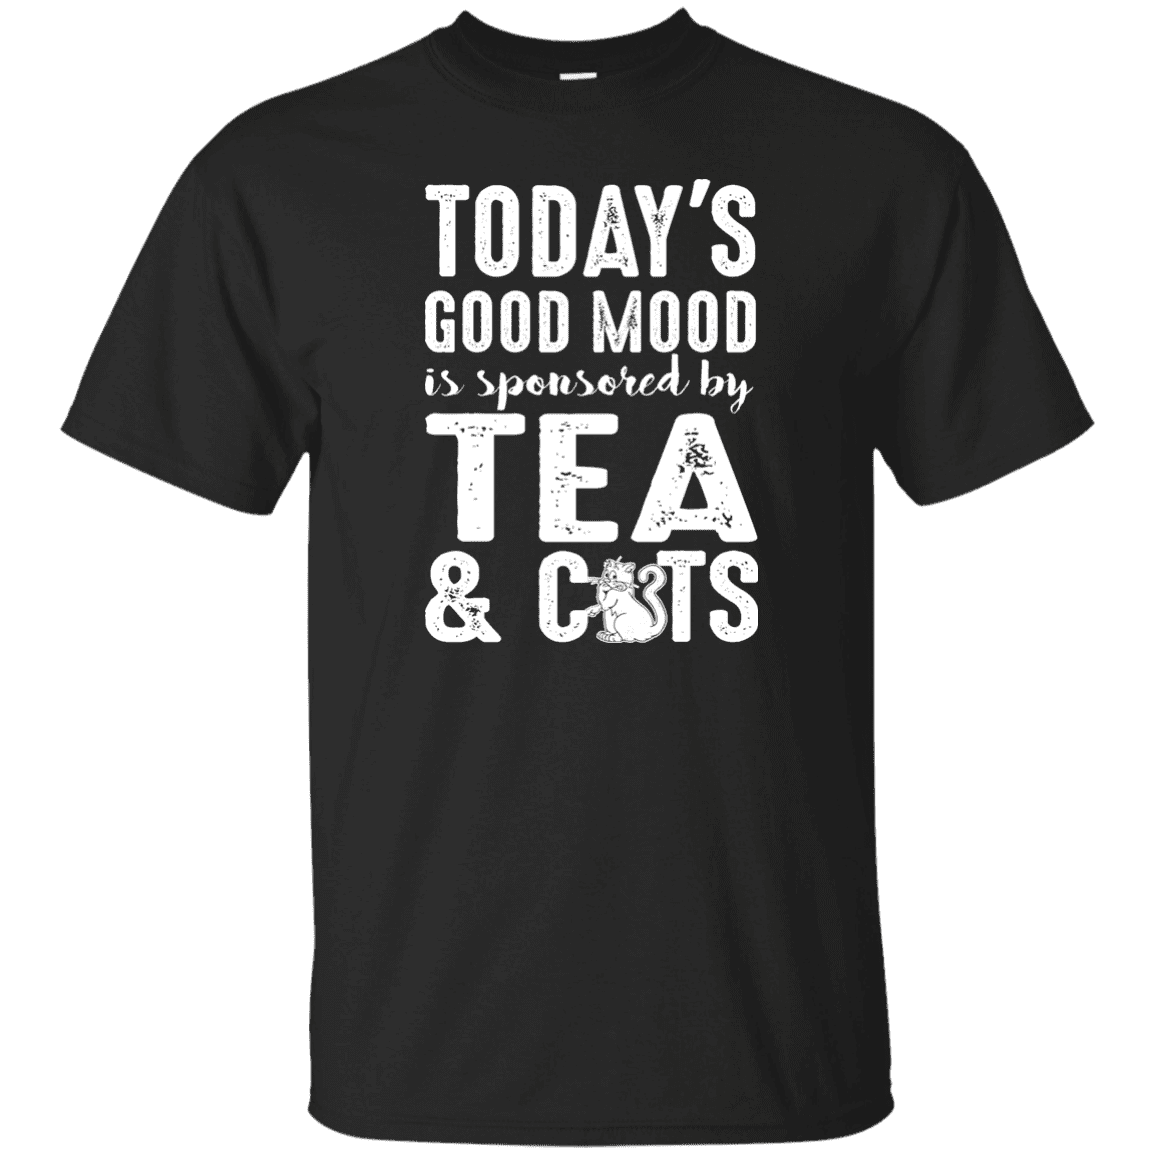 Today's Good Mood Tea & Cats - T Shirt.